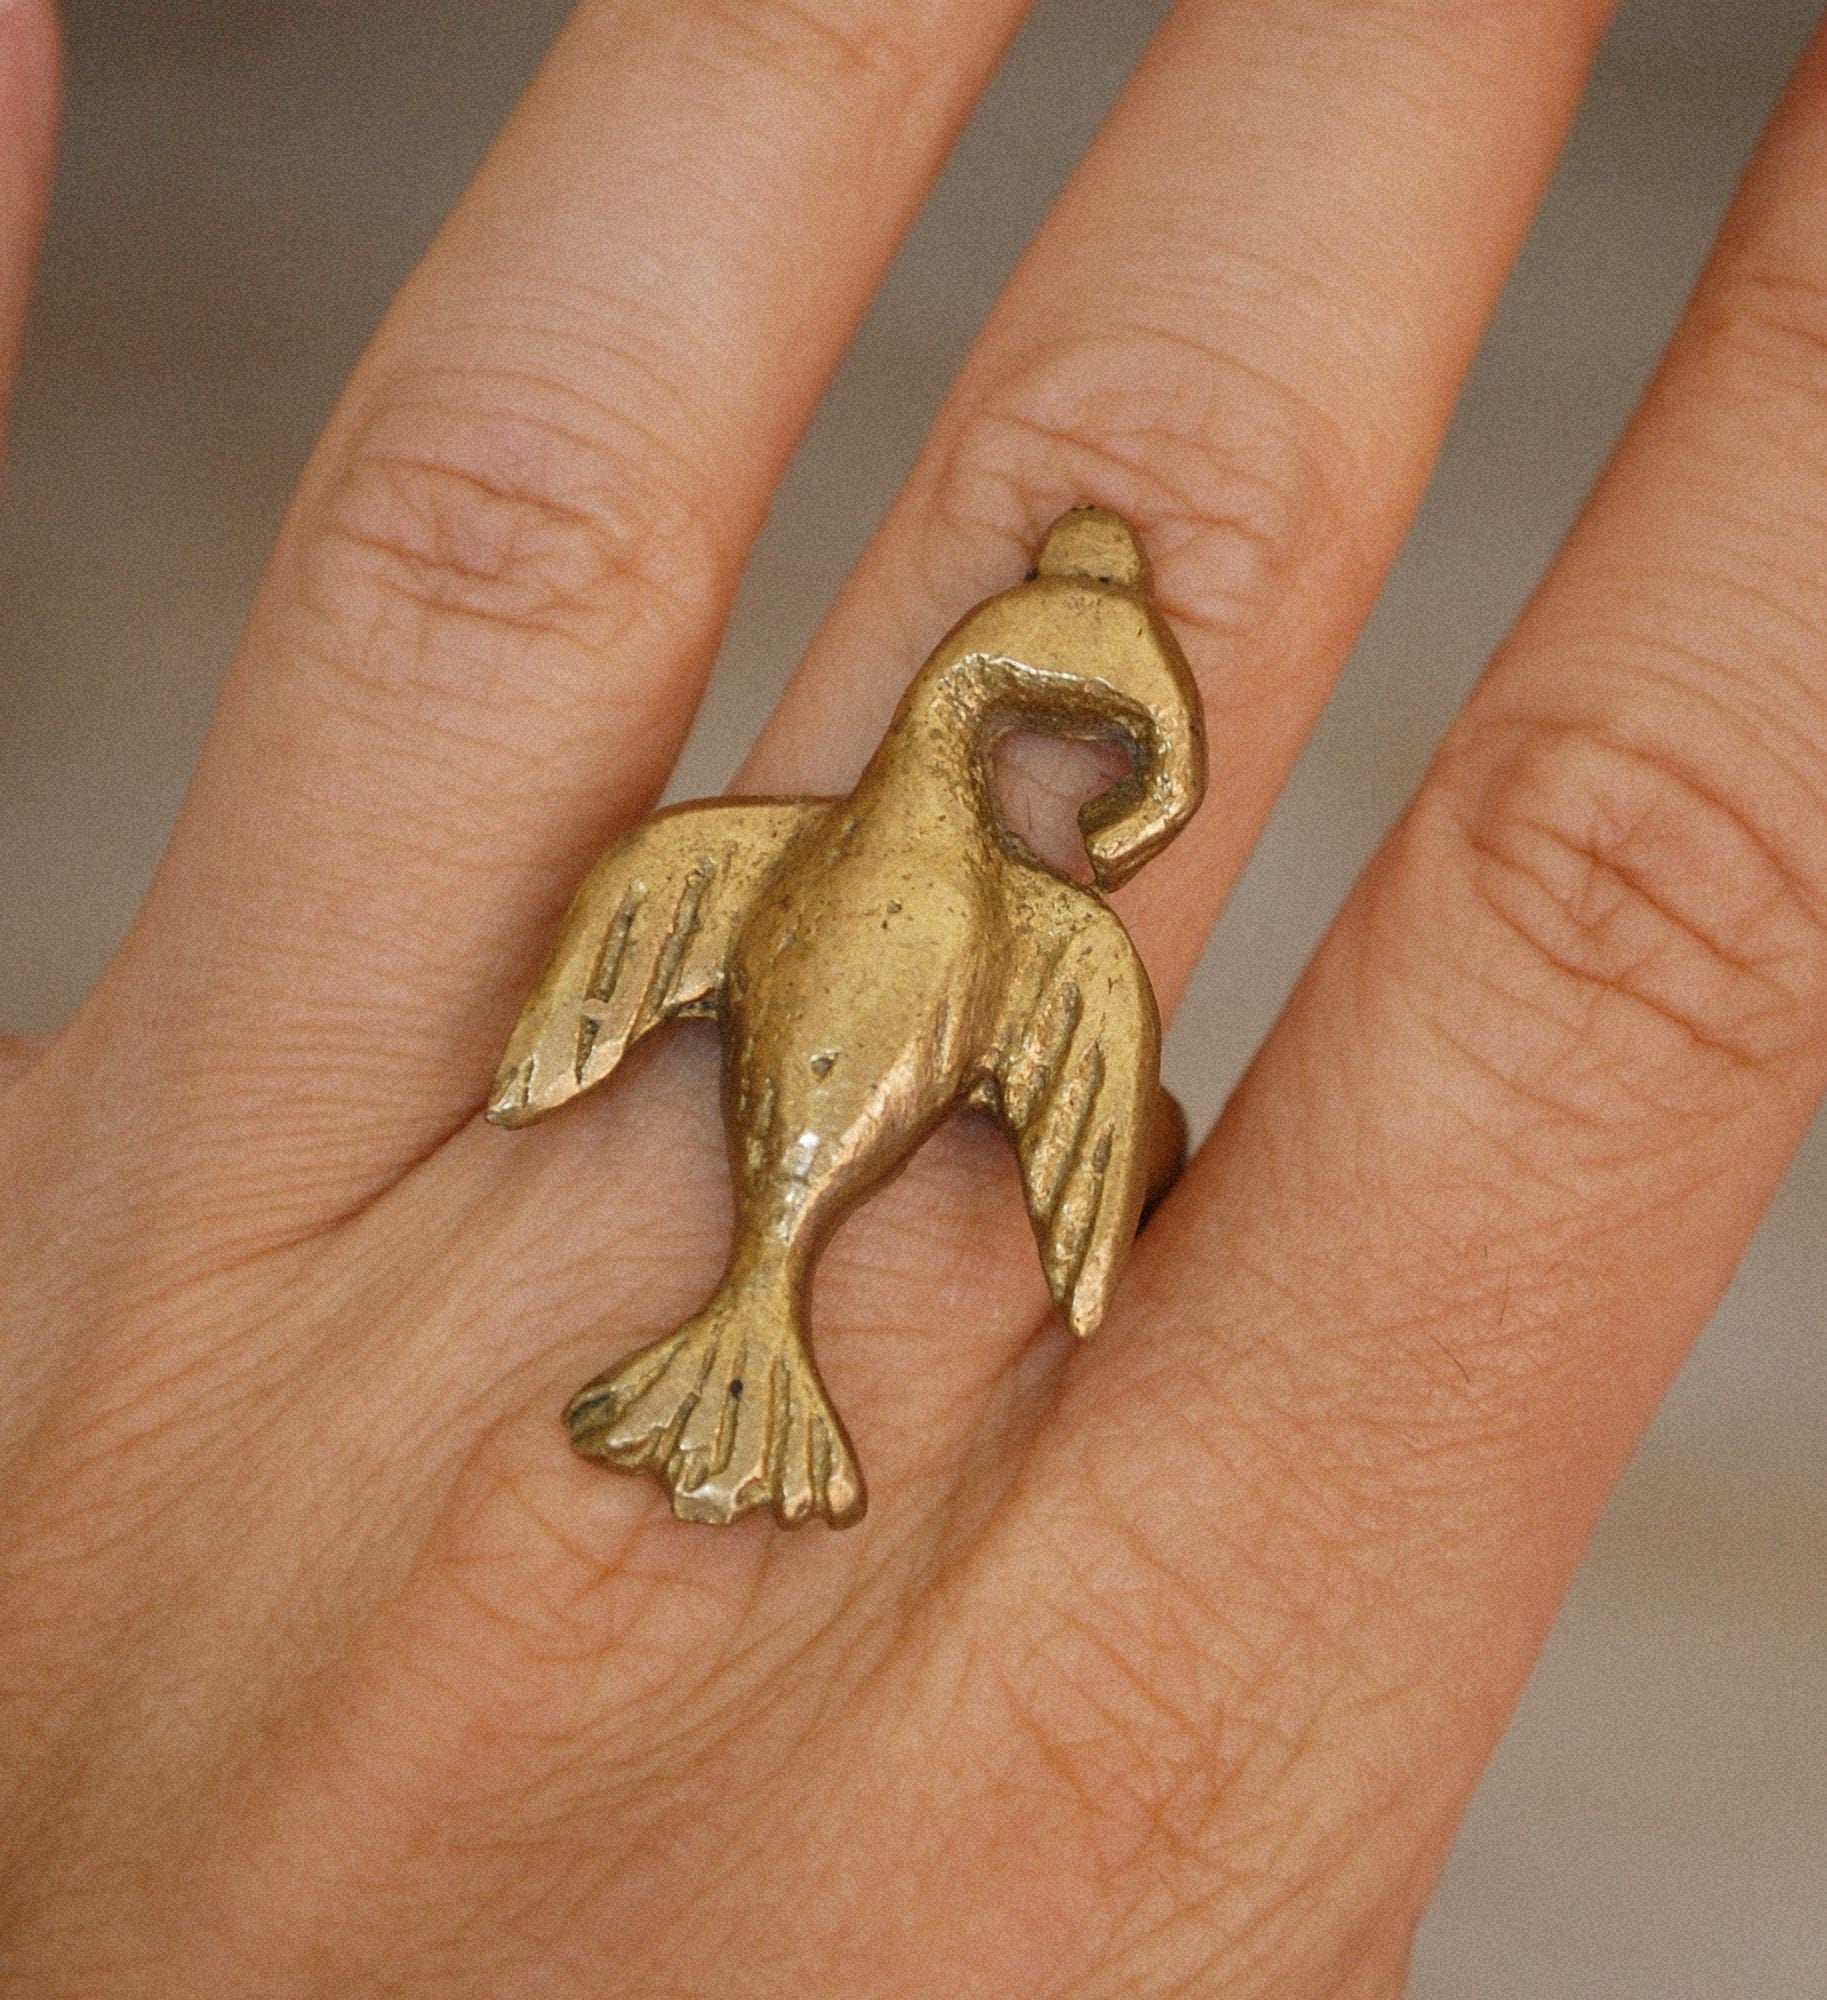 Old Akan Bird Ring - Size 10 - Ashanti Bird Ring - Adinkra Bird Ring - African Brass Ring from Ghana